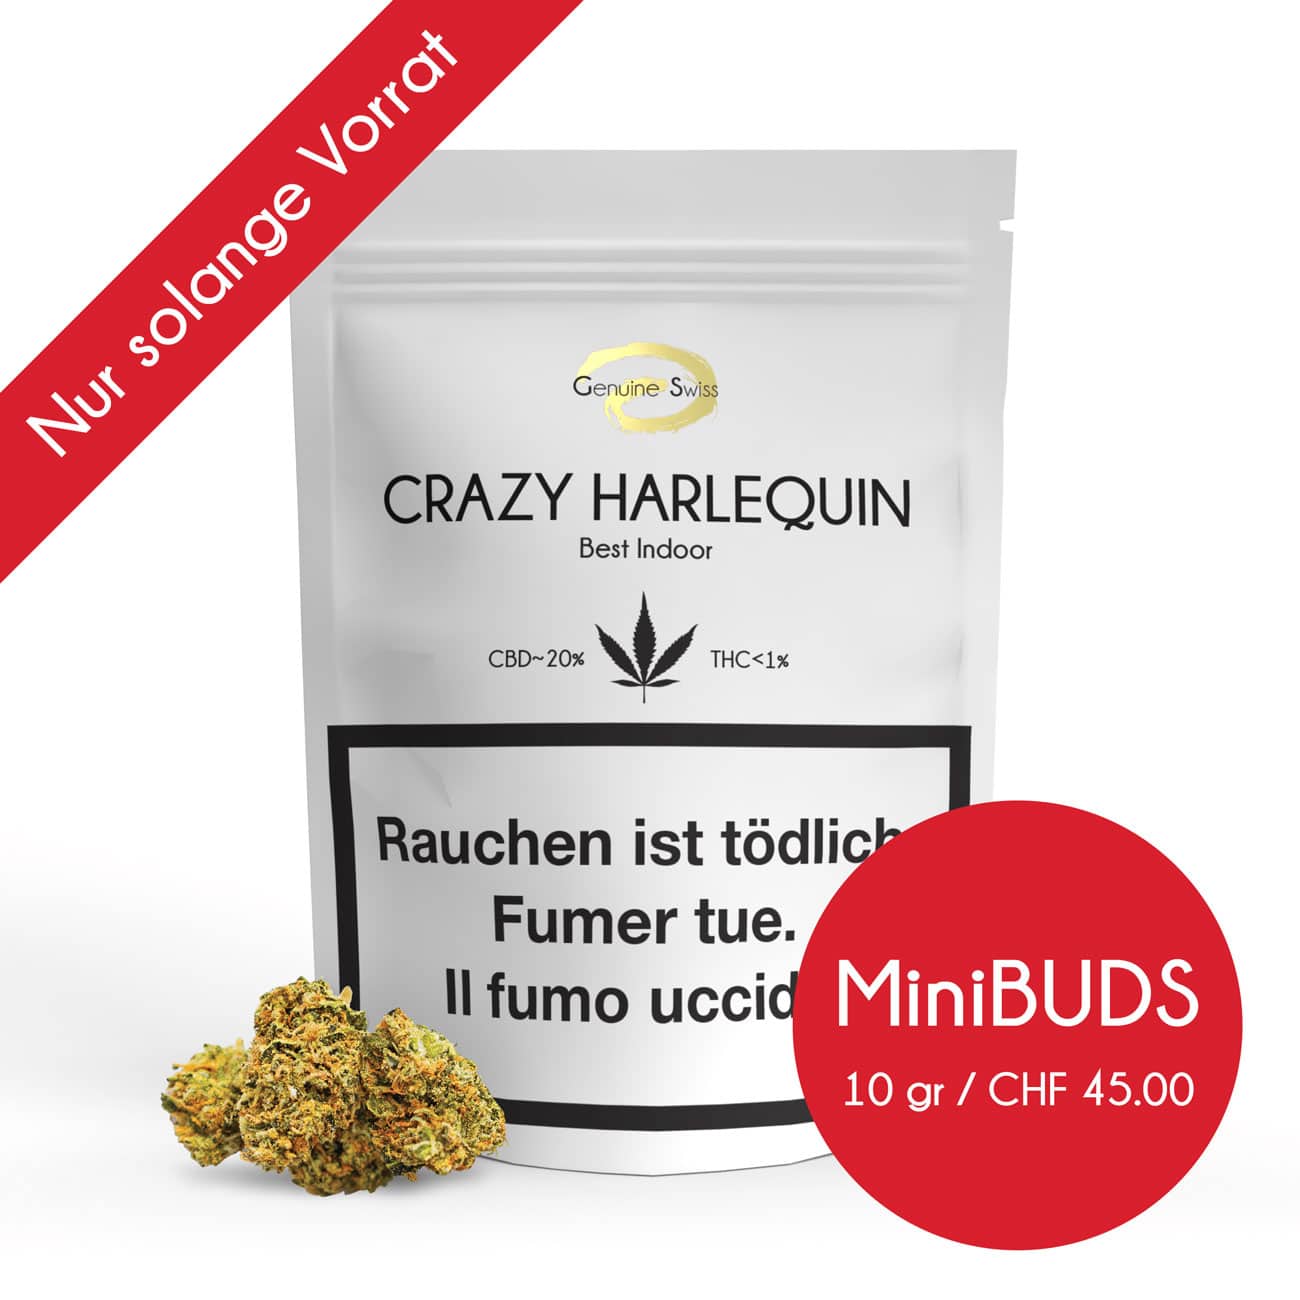 Genuine Swiss Crazy Harlequin Minibuds, Small Buds CBD